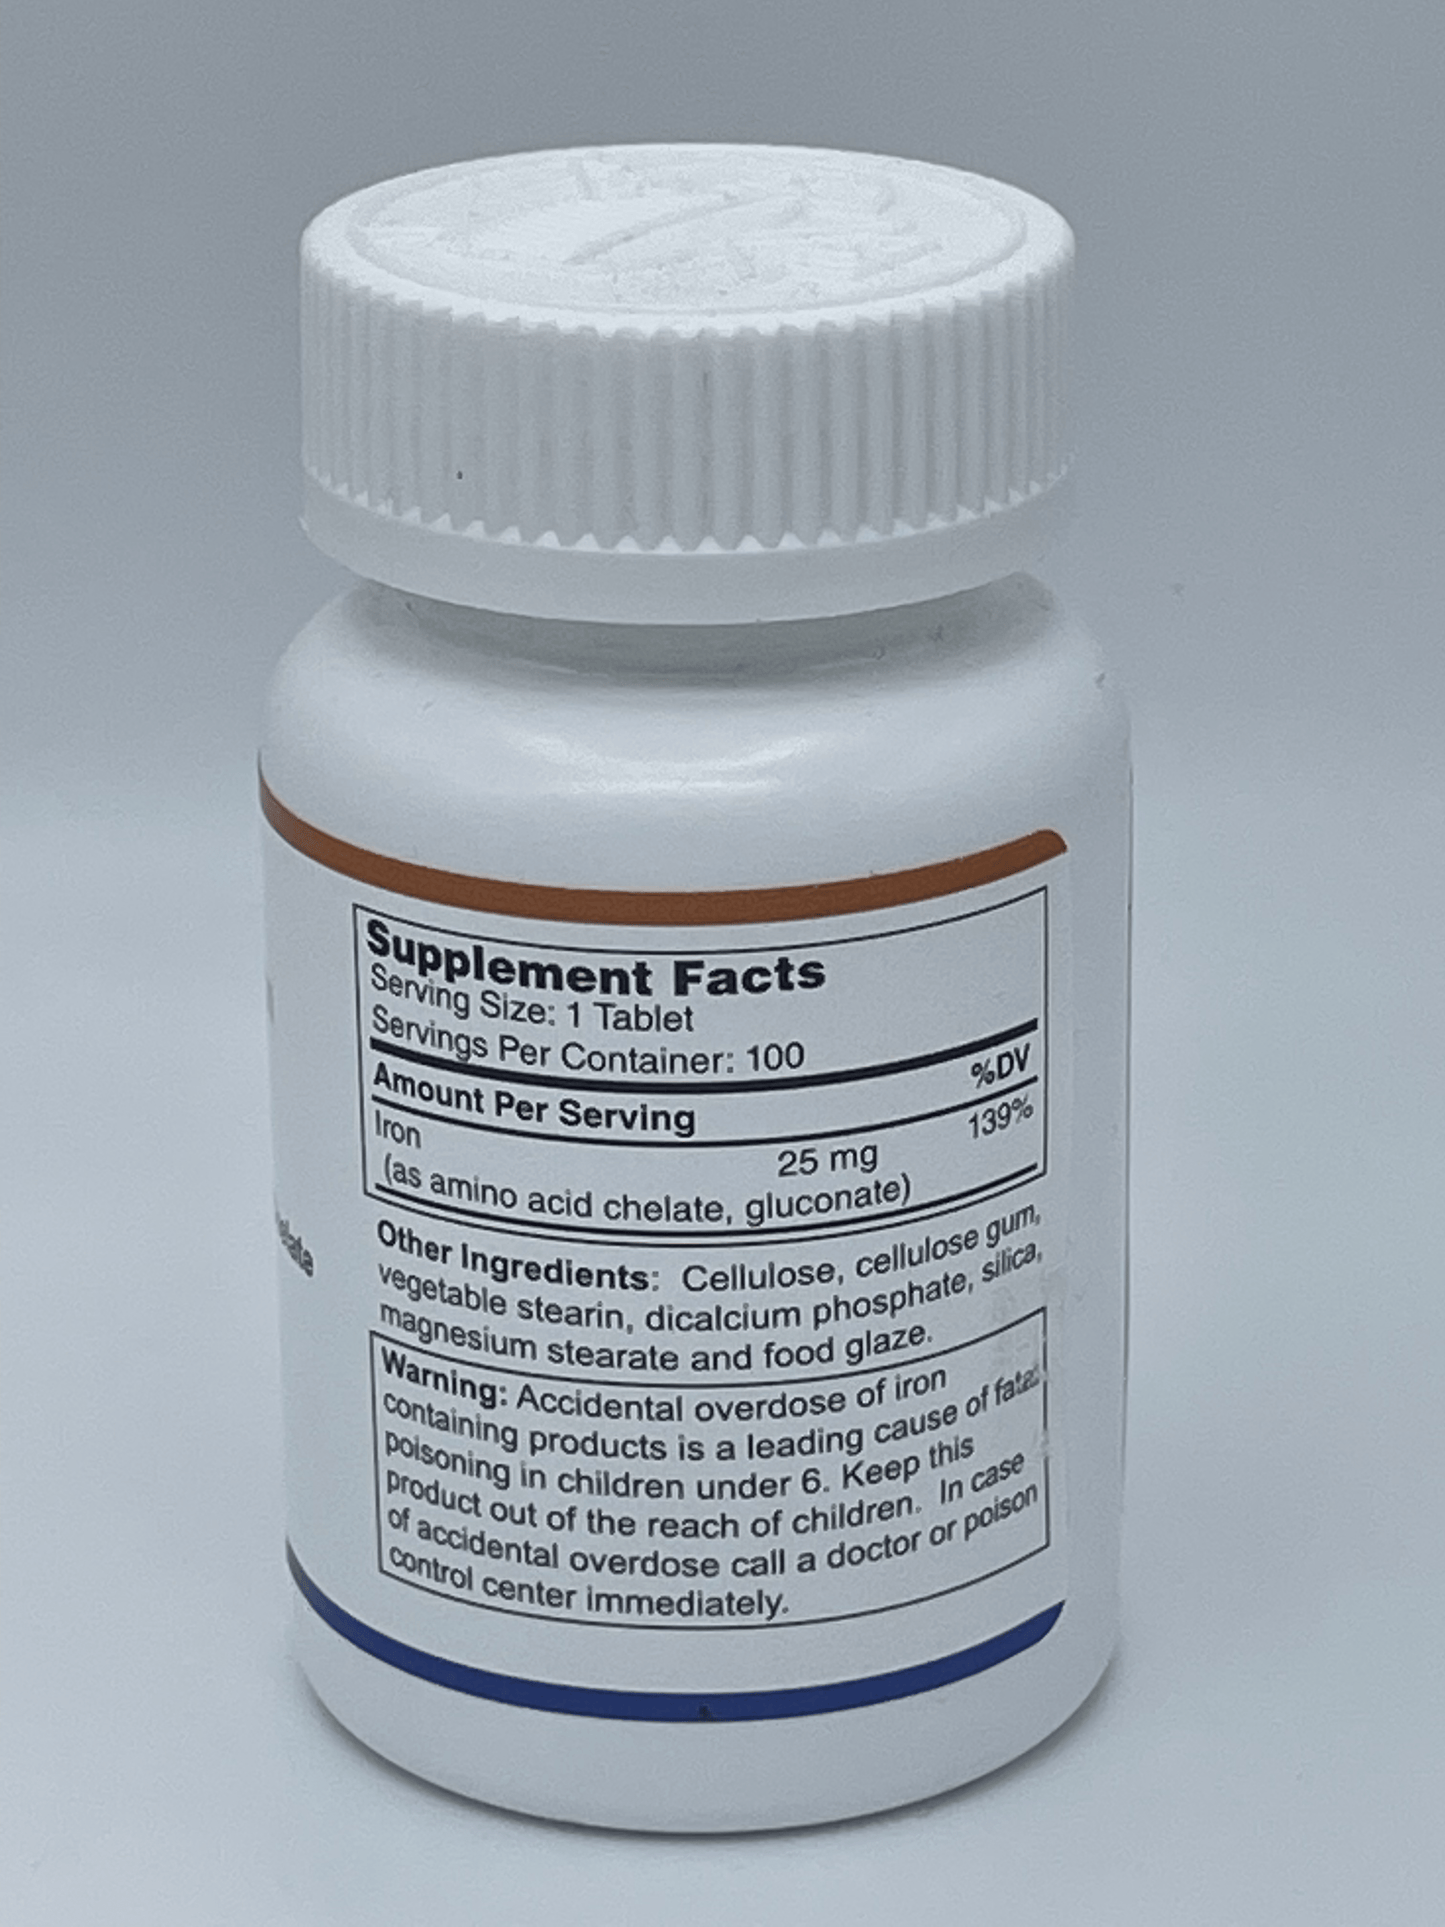 Iron / 25 mg as Amino Acid Chelate & Gluconate